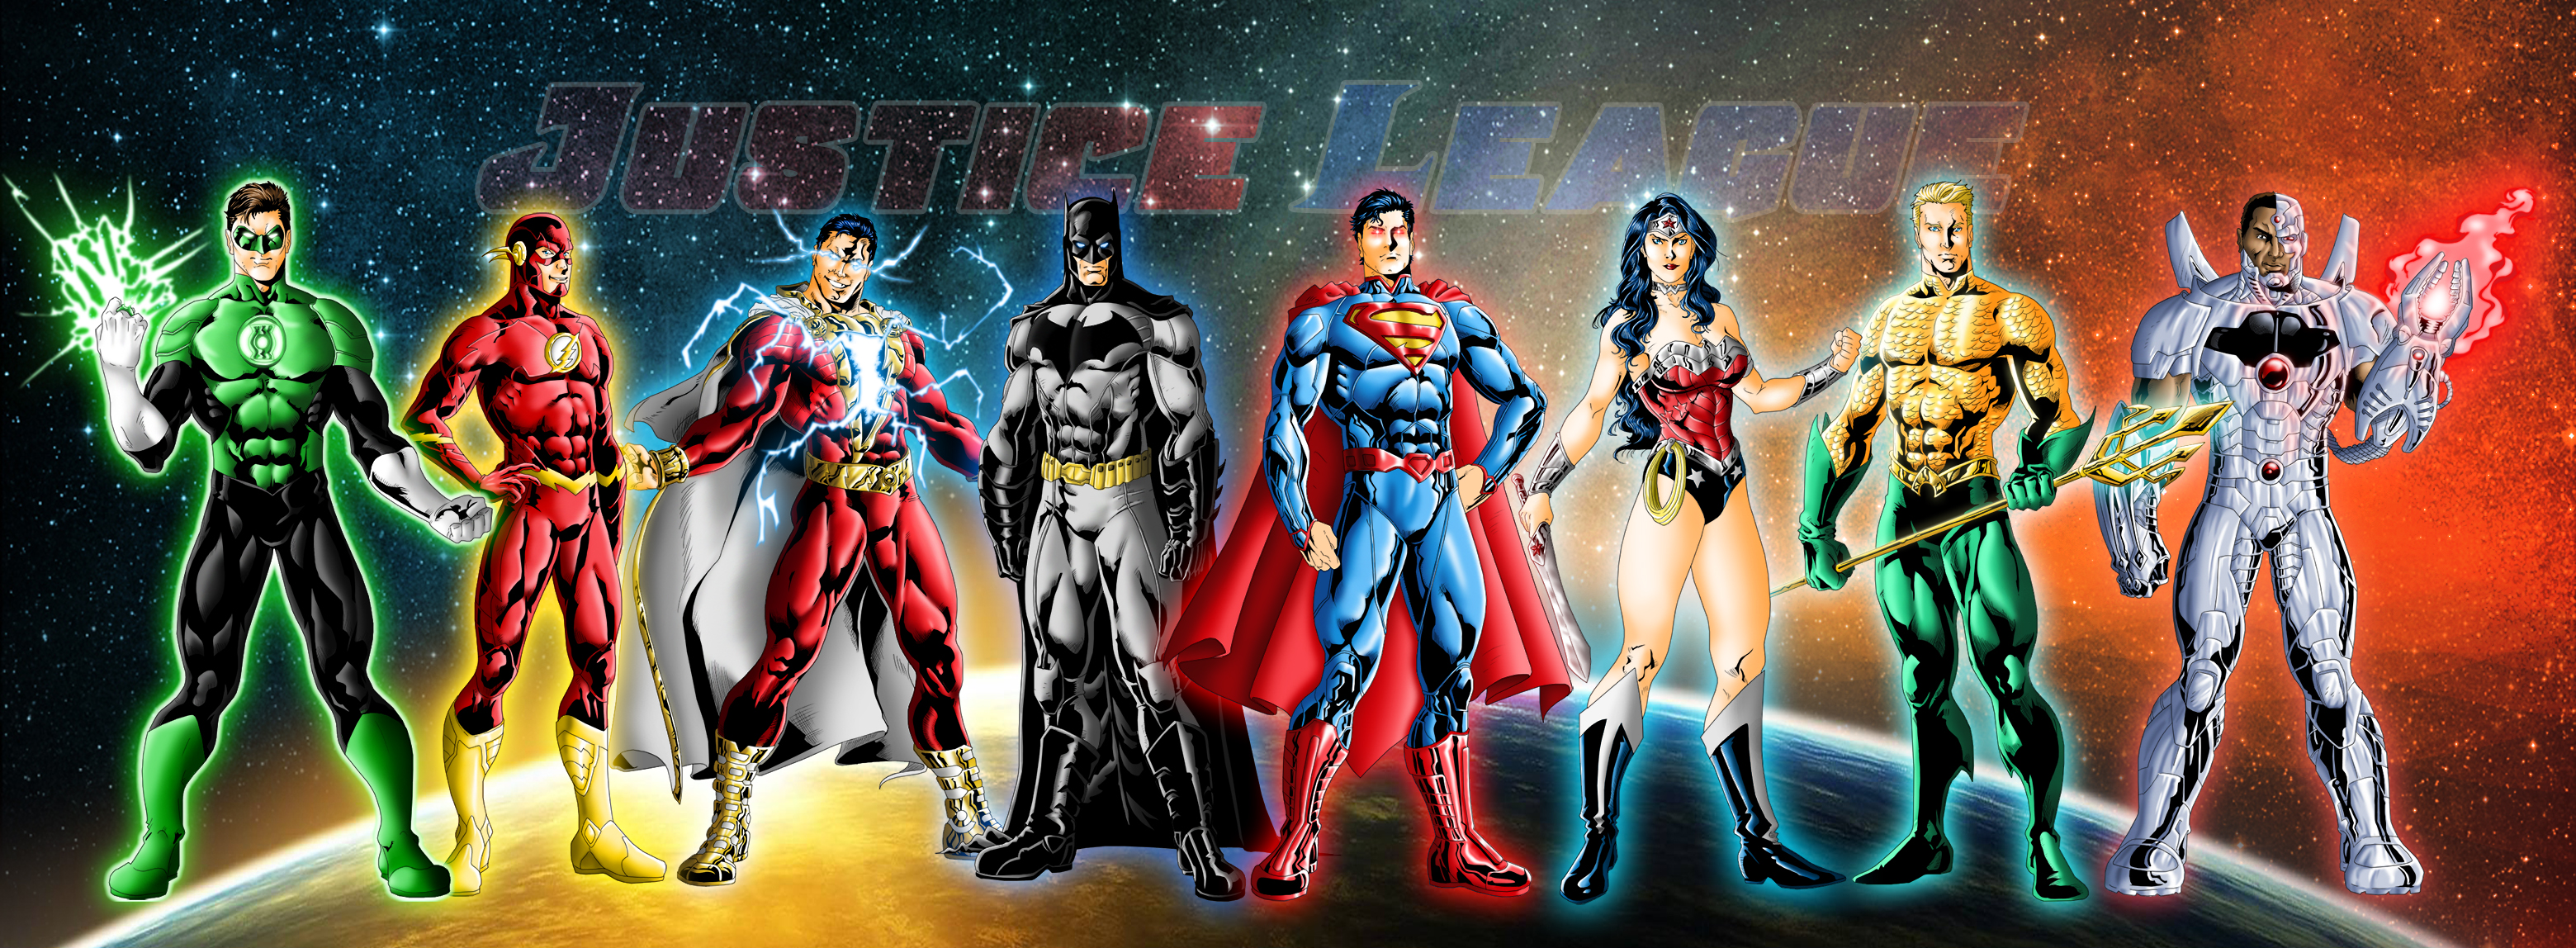 superman, batman, aquaman, comics, justice league, barry allen, billy batson, cyborg (dc comics), dc comics, diana prince, flash, green lantern, hal jordan, shazam (dc comics), superhero, wonder woman